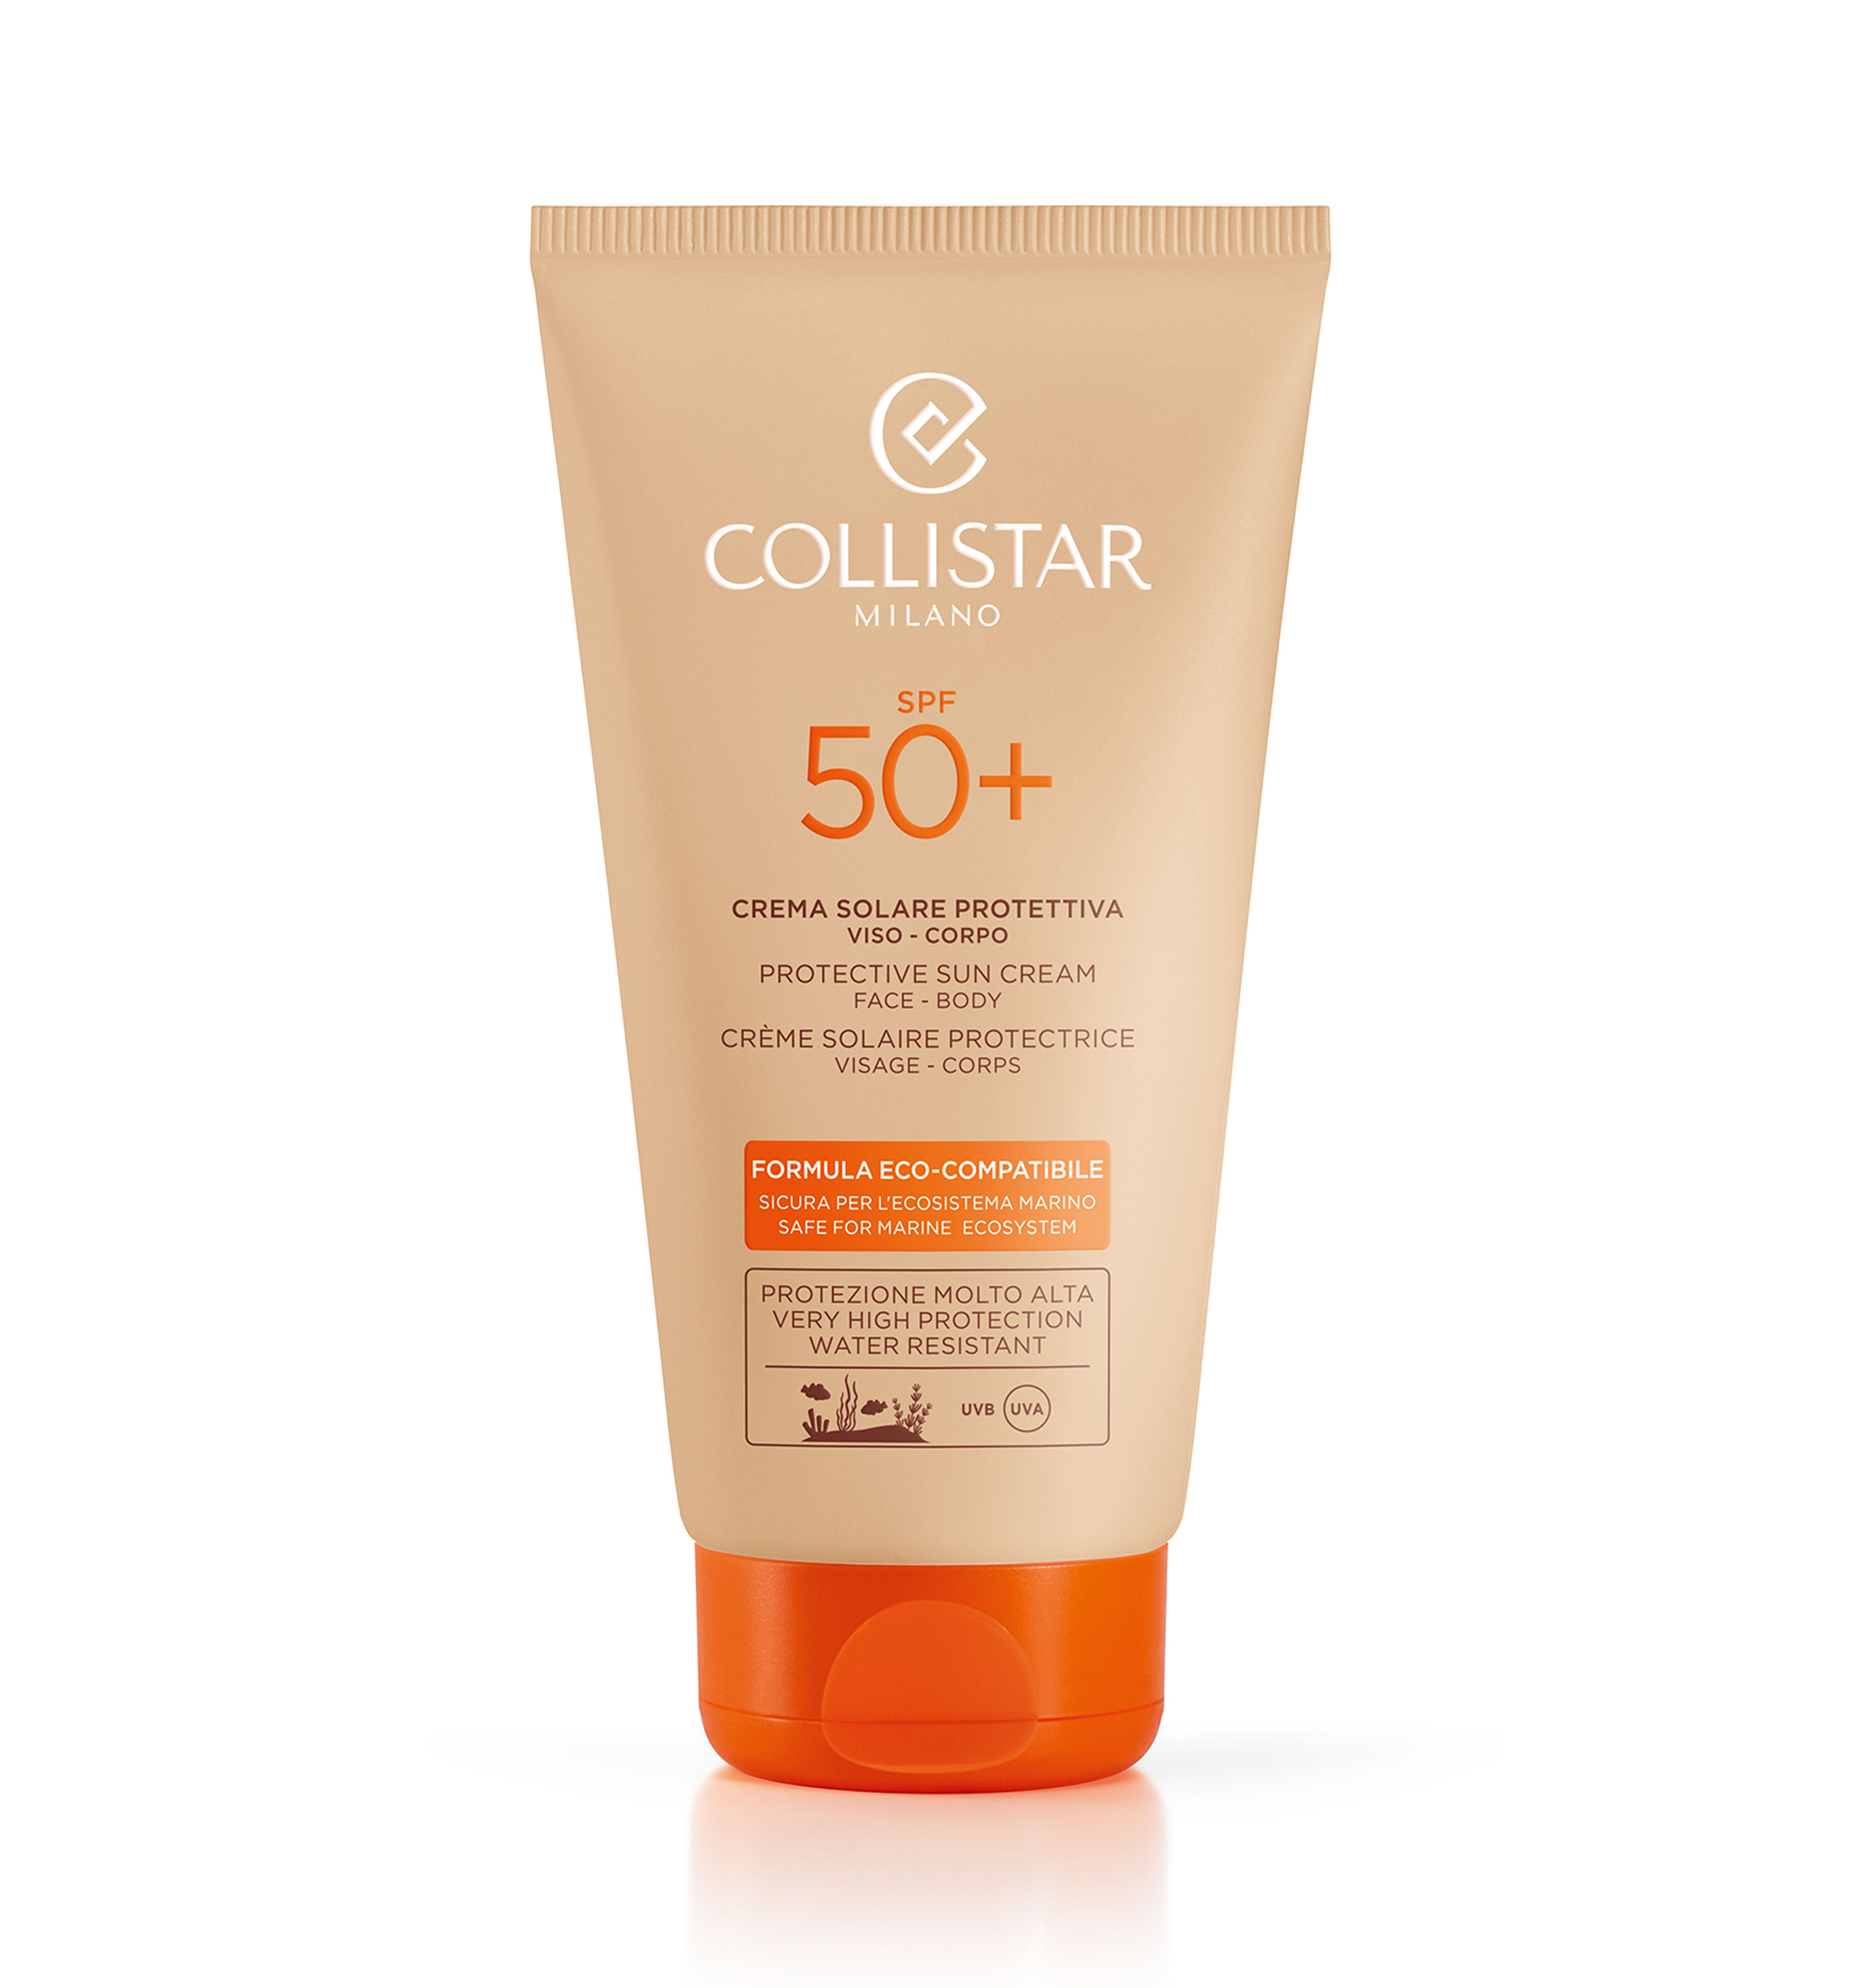 PROTECTIVE SUN CREAM SPF 50+ by Collistar | Shop Online